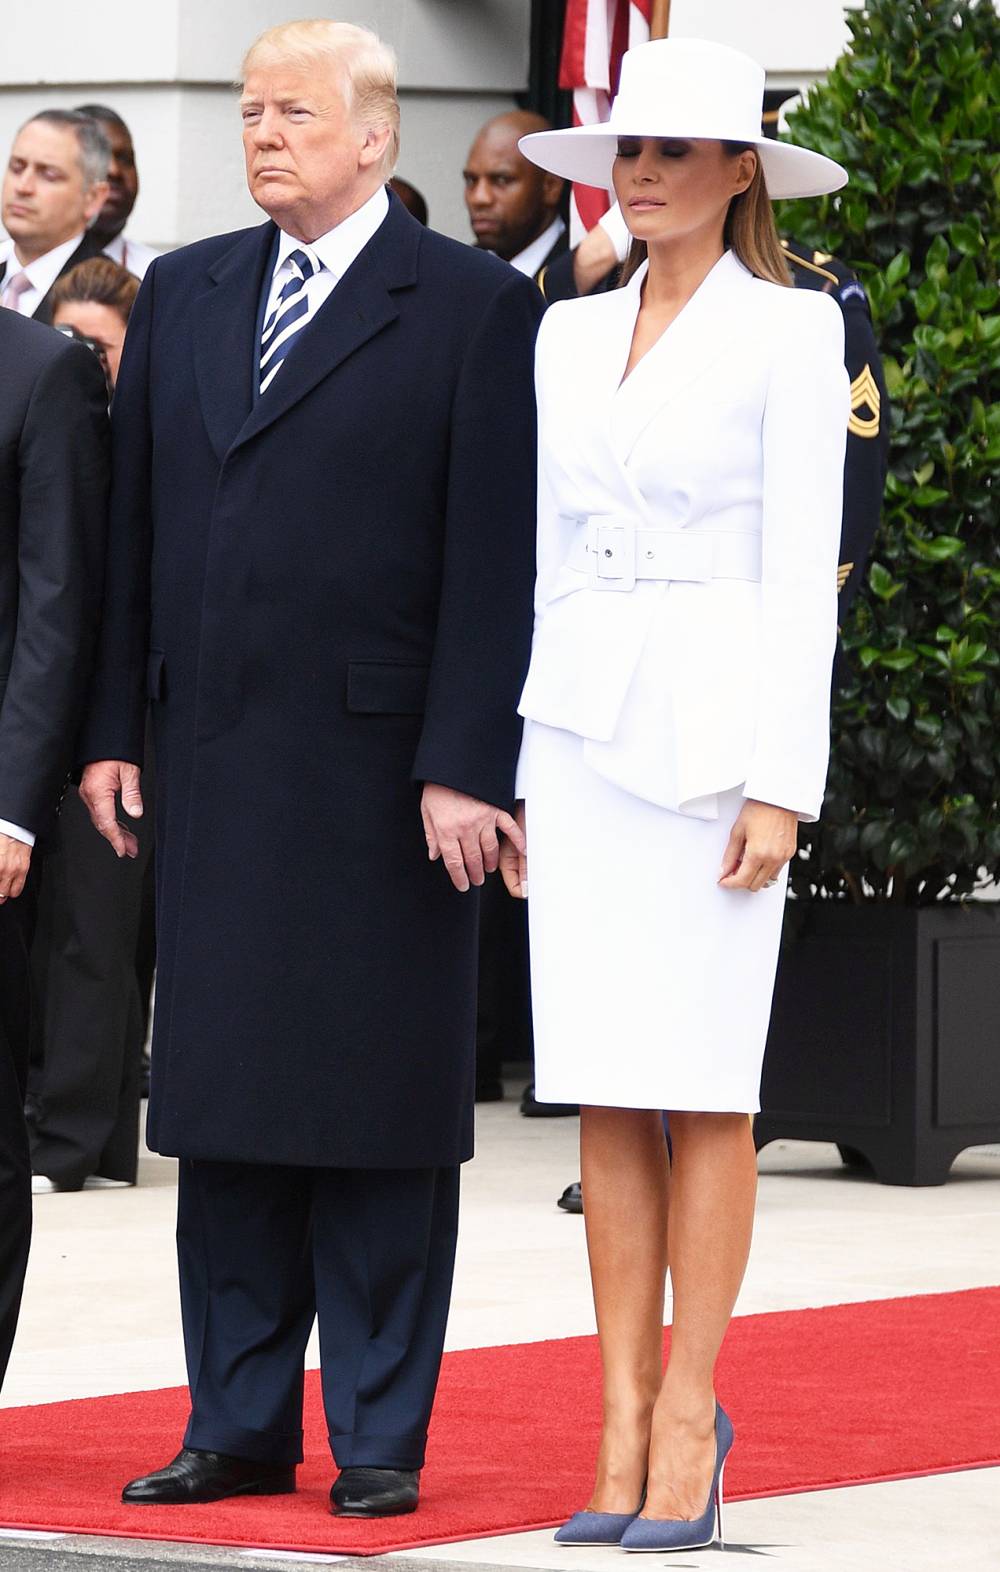 Donald Trump Melania Trump awkward holding hands